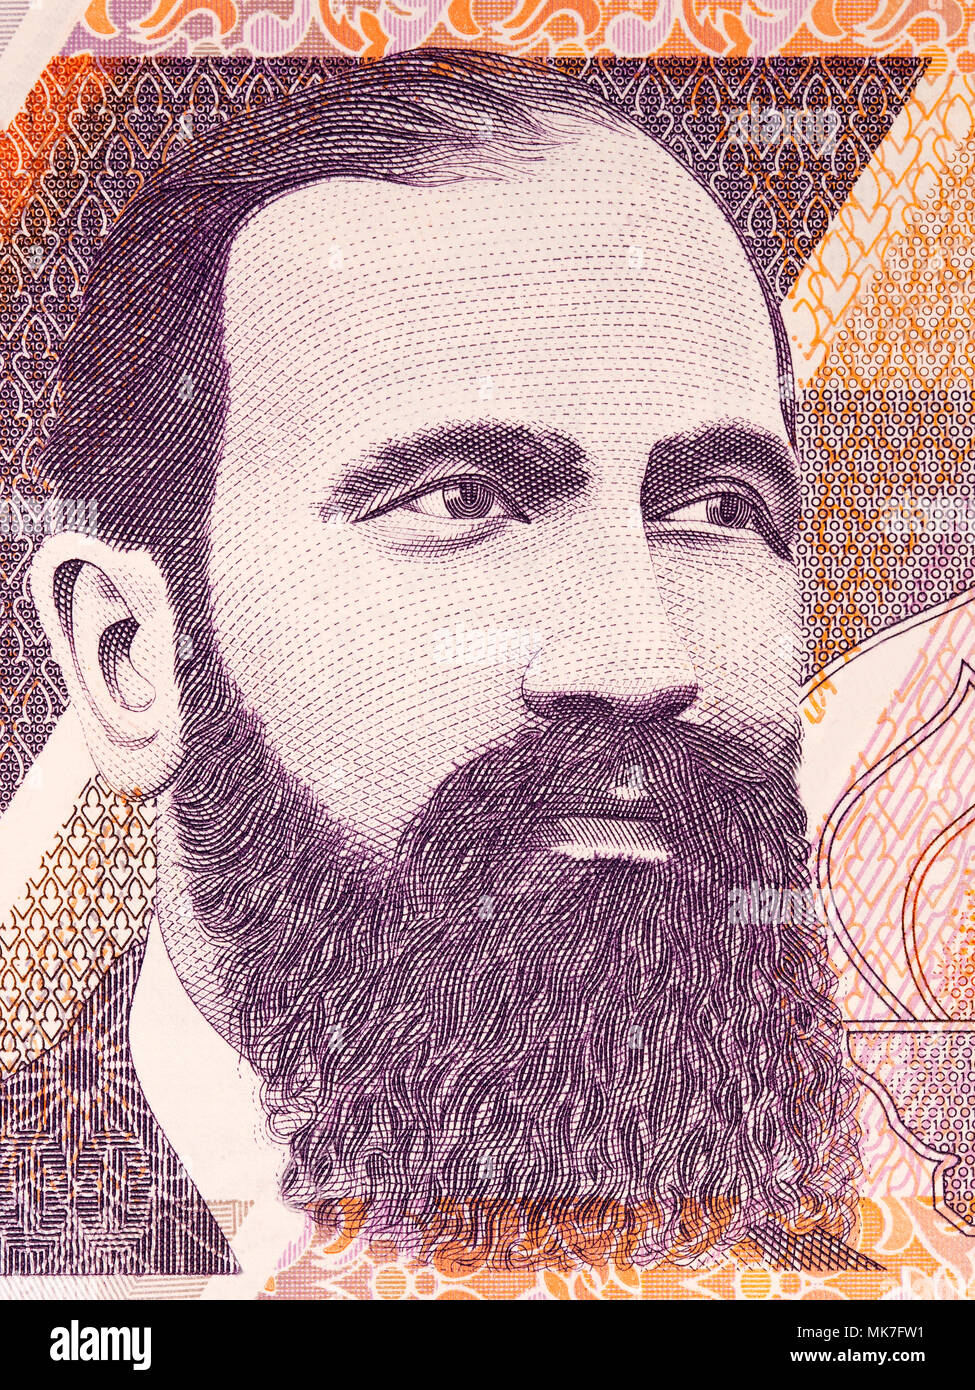 Theofan Stilian Noli portrait from Albanian money Stock Photo